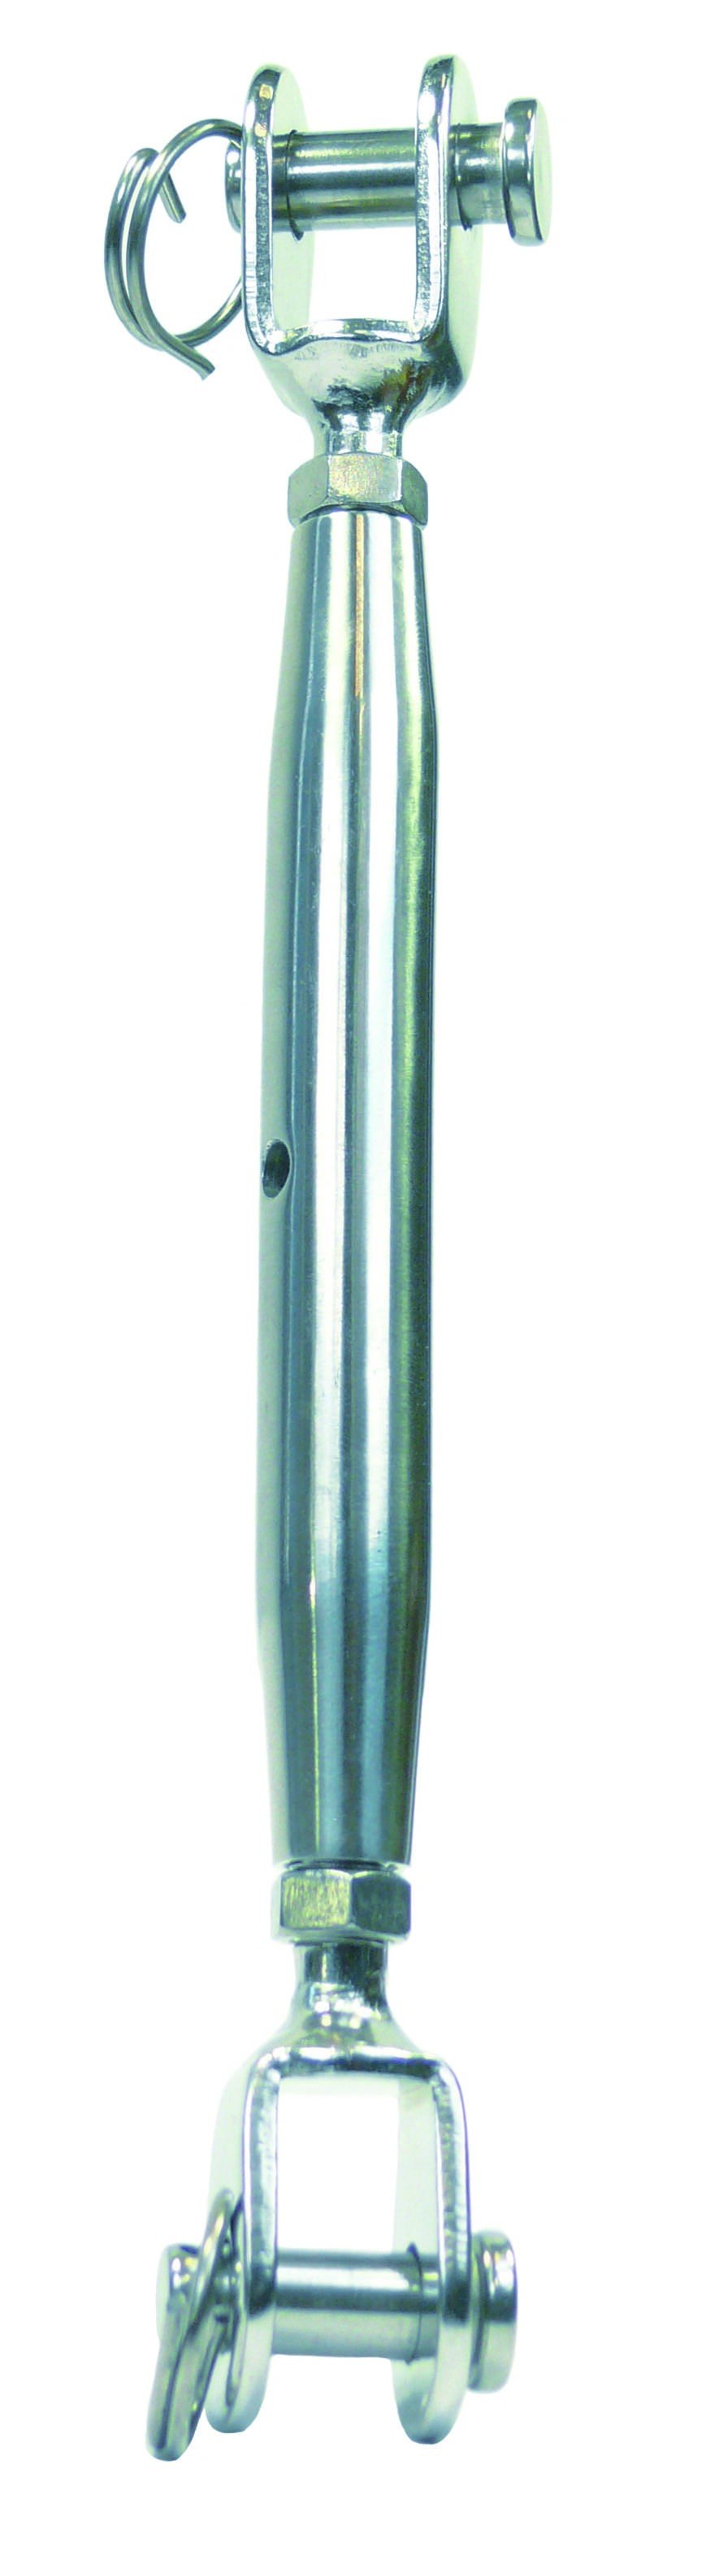 Wantspanner gaffel-gaffel M10 RVS A4 1 stuks